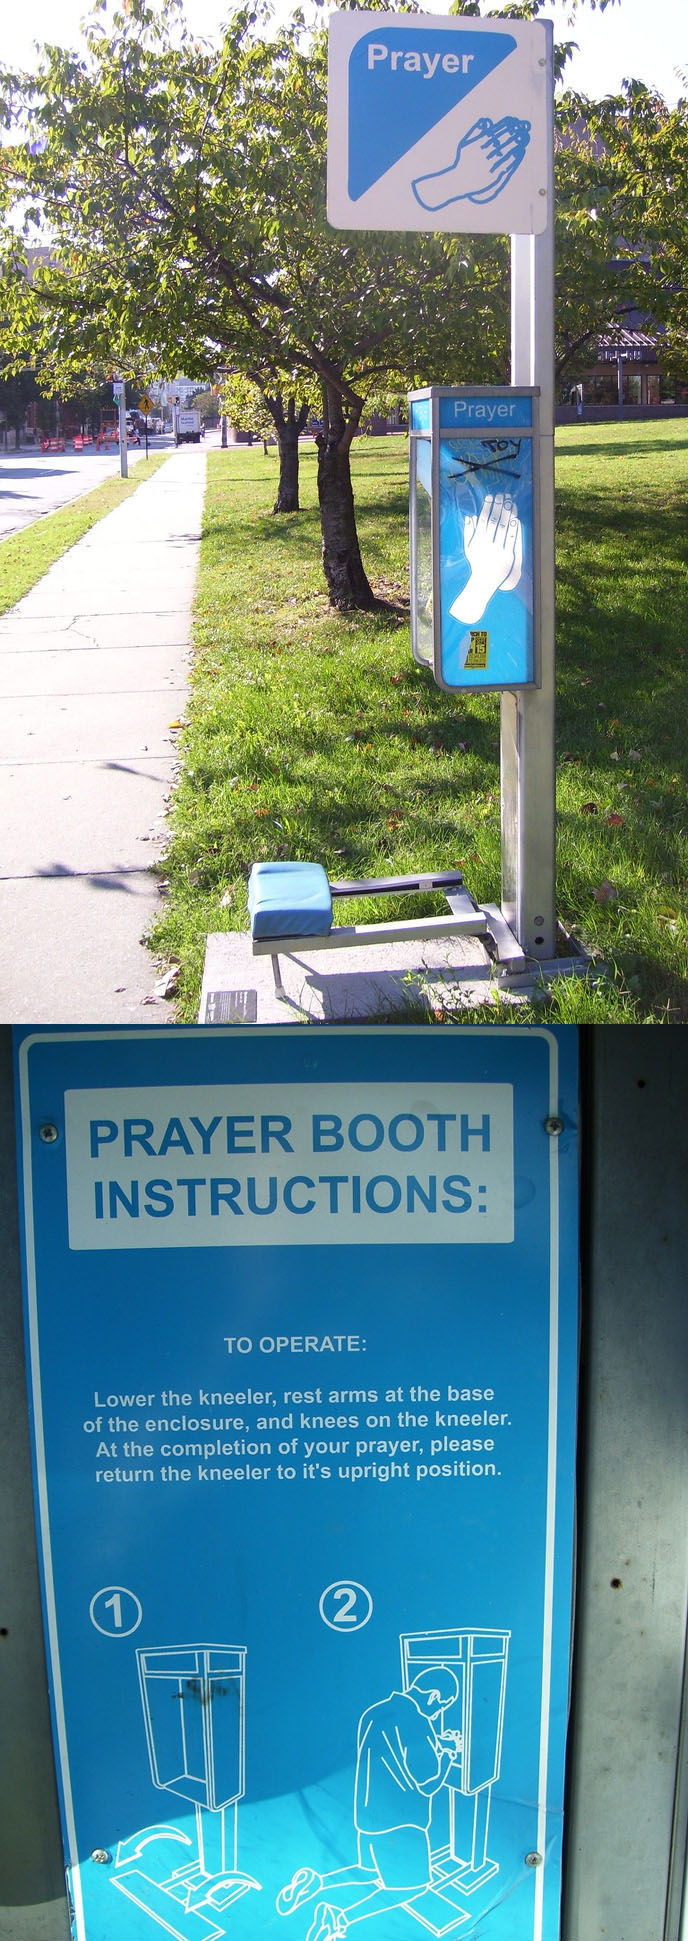 prayer_booth.jpg